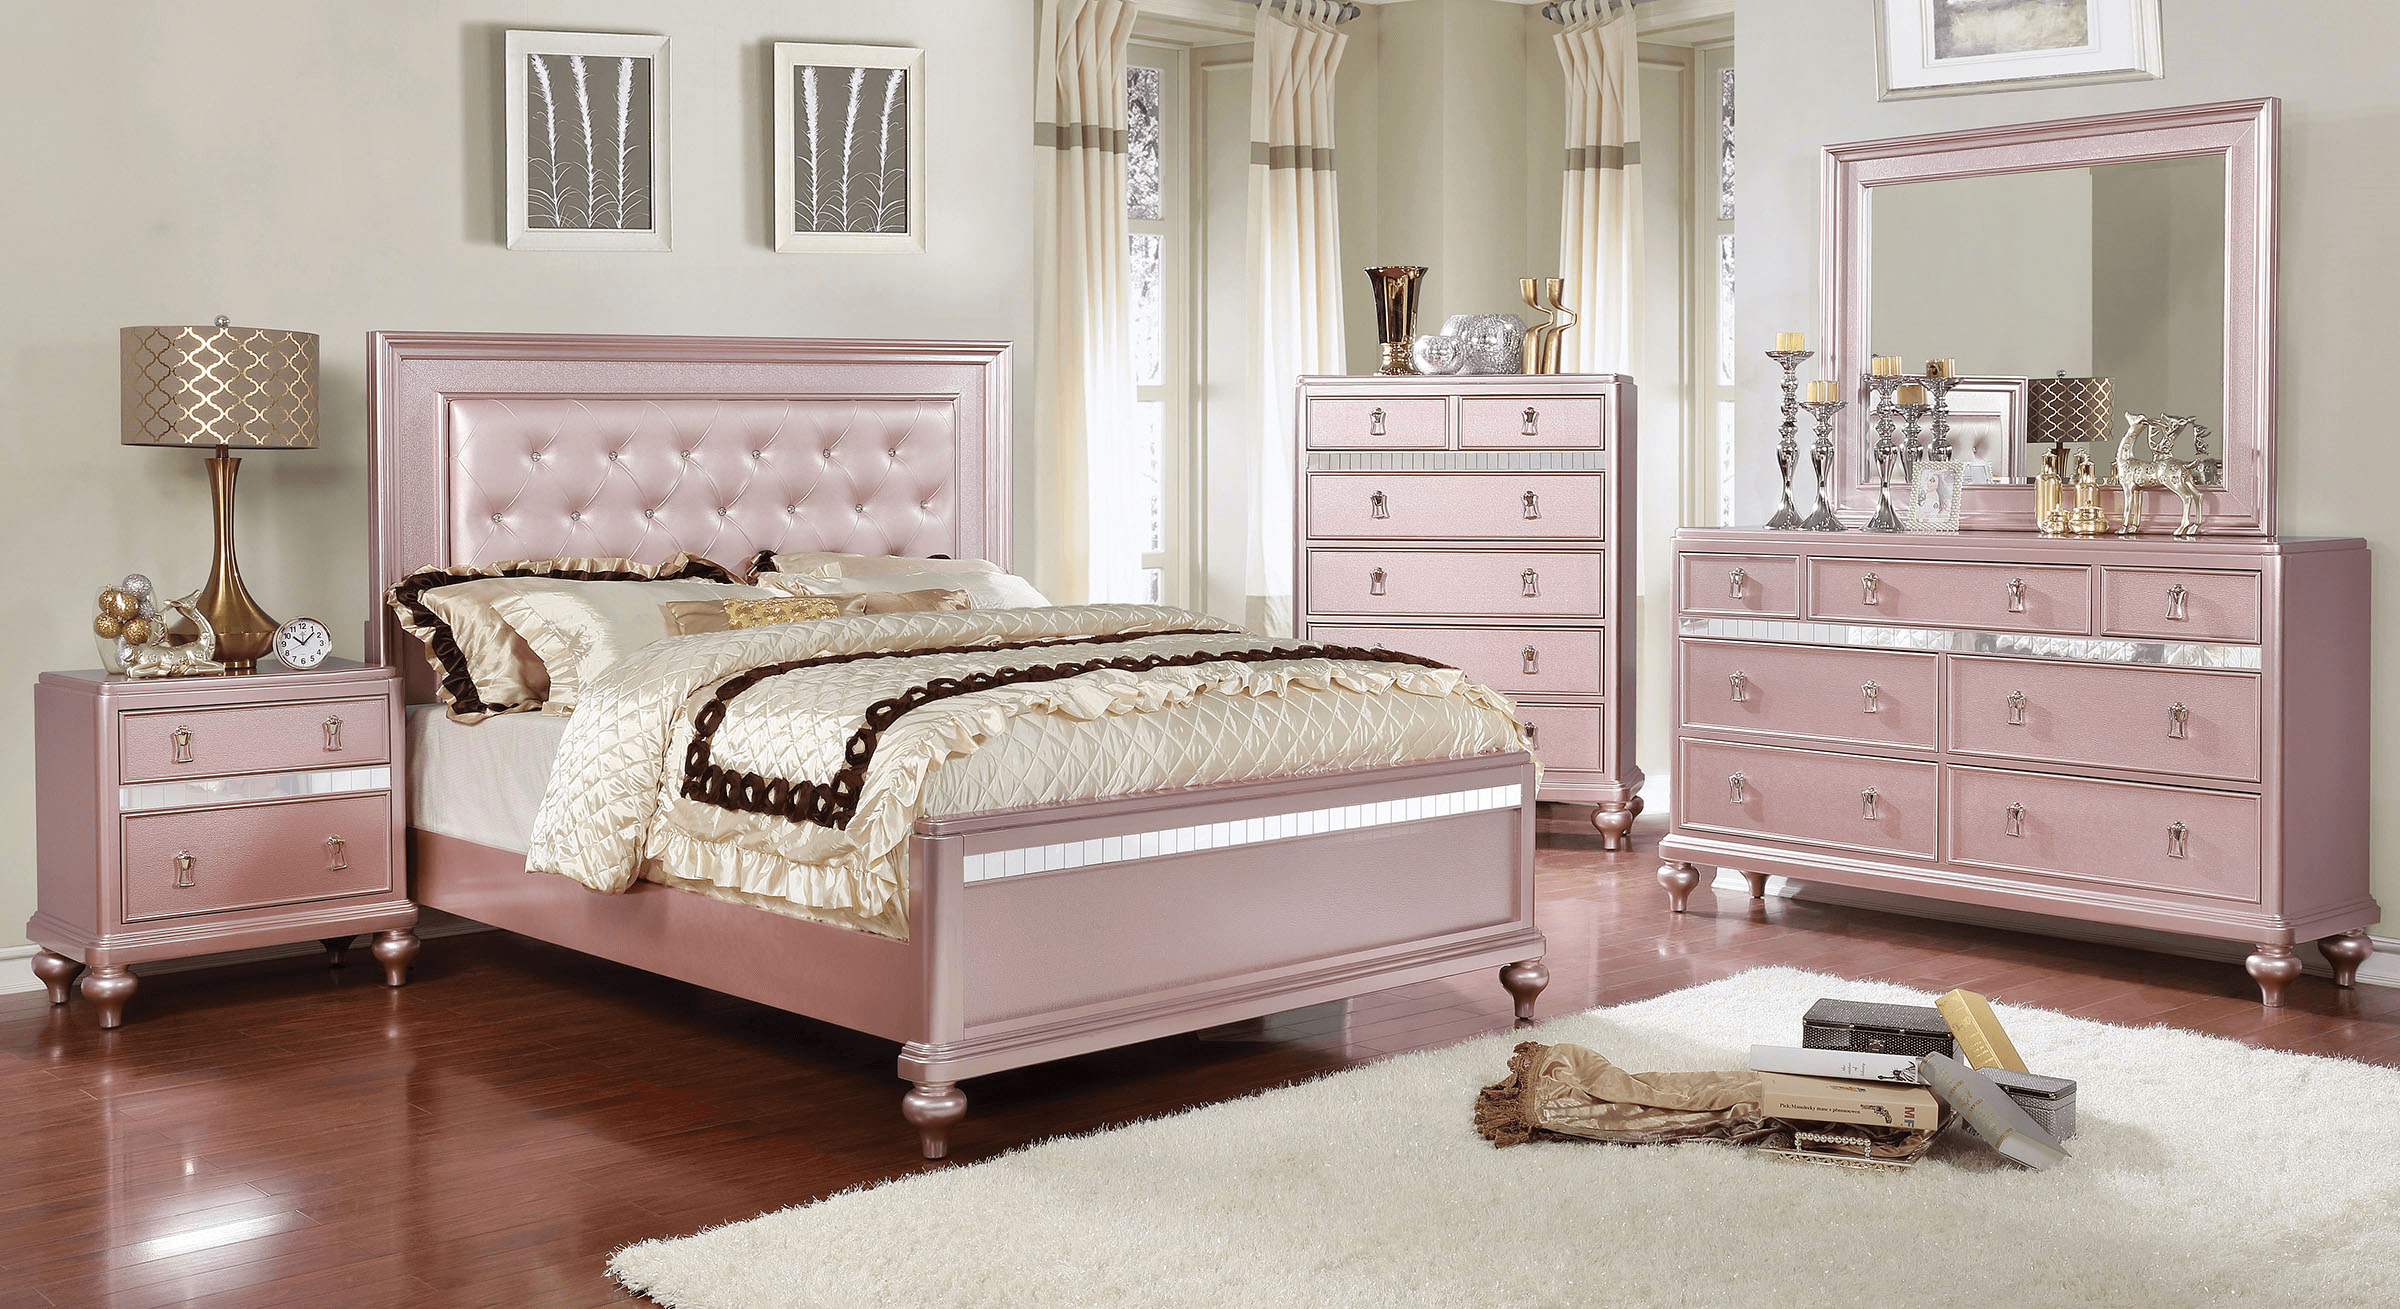 Ariston Rose Gold Bedroom Set pertaining to size 2400 X 1309